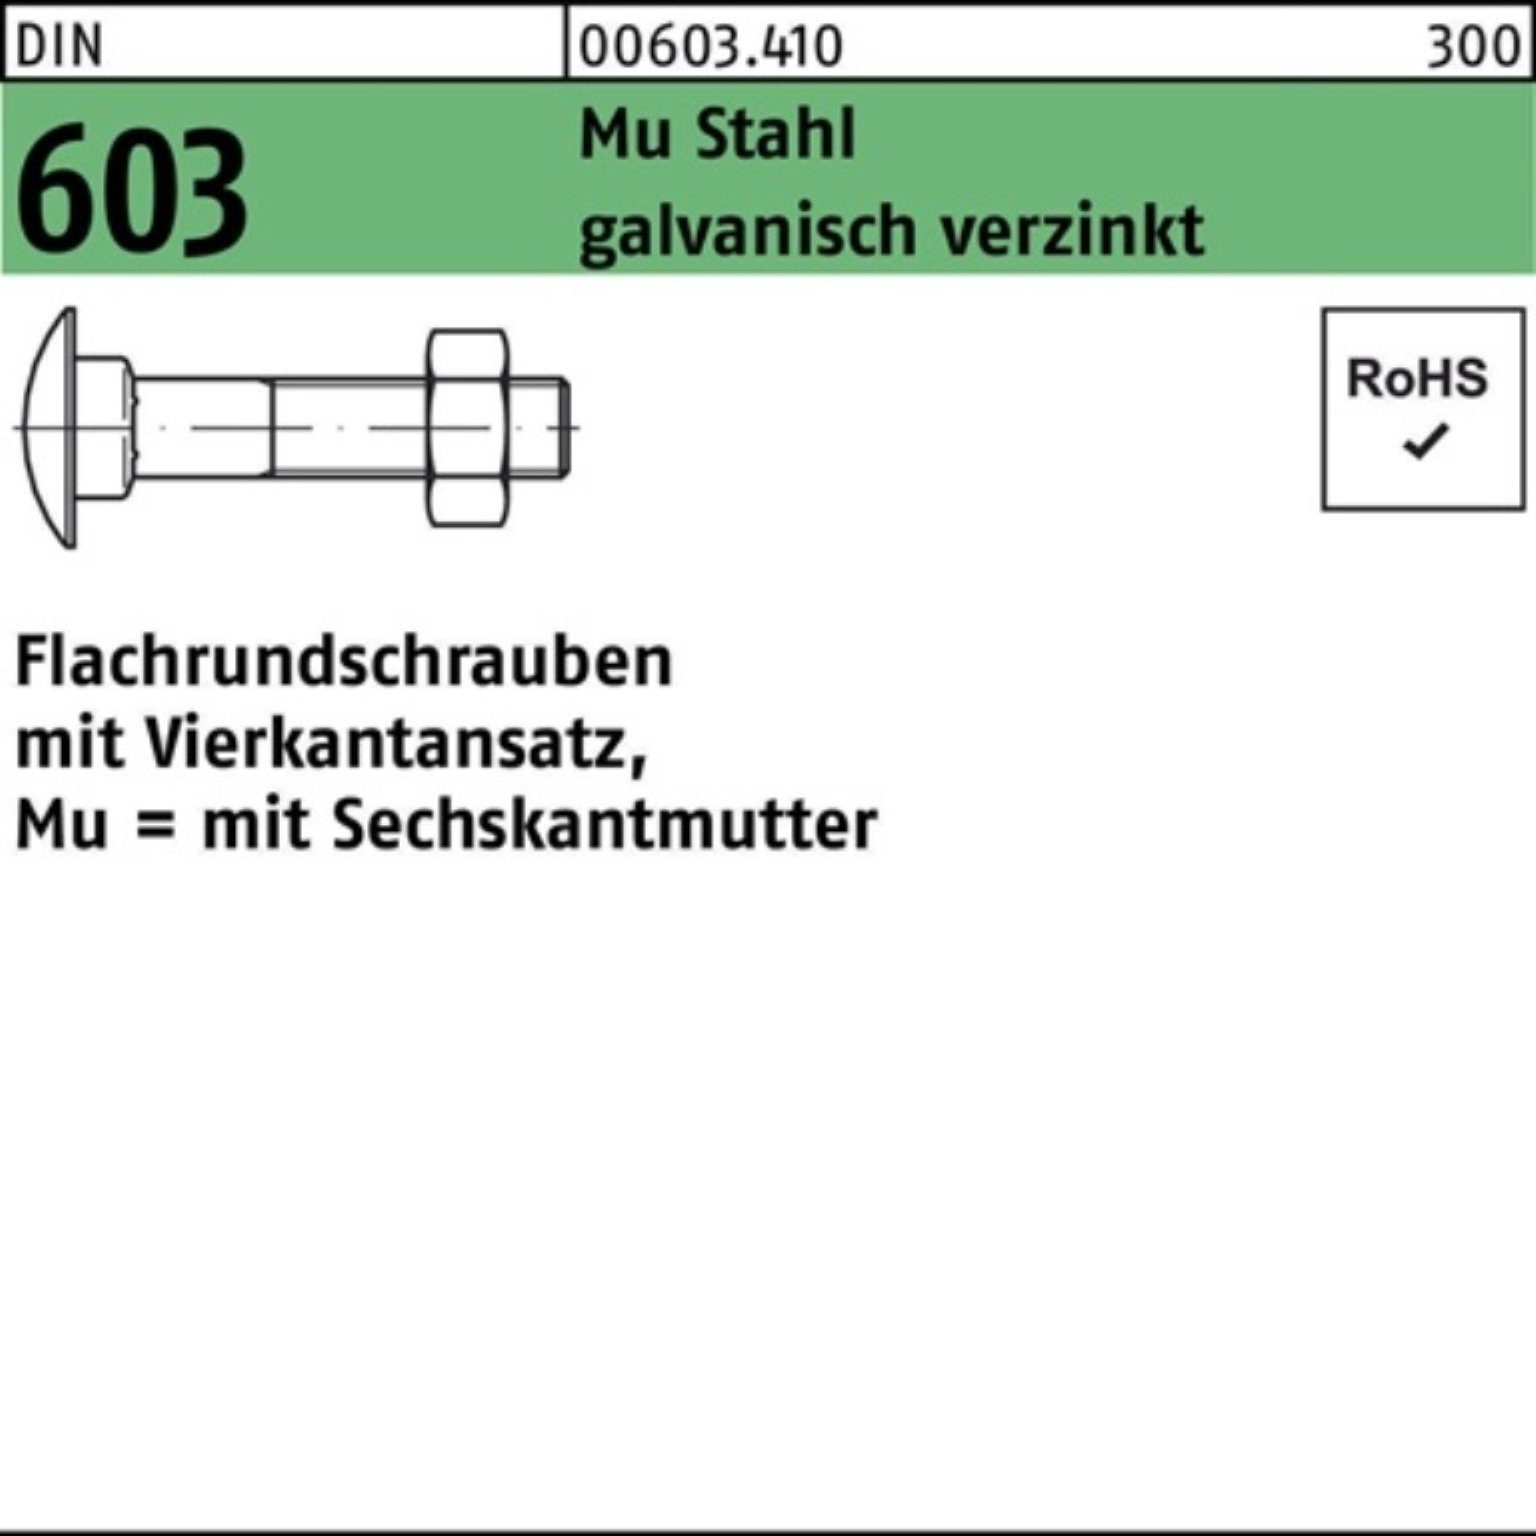 DIN Vierkantansatz/6-ktmutter Flachrundschraube 603 Reyher Schraube 100er M16x75 Pack